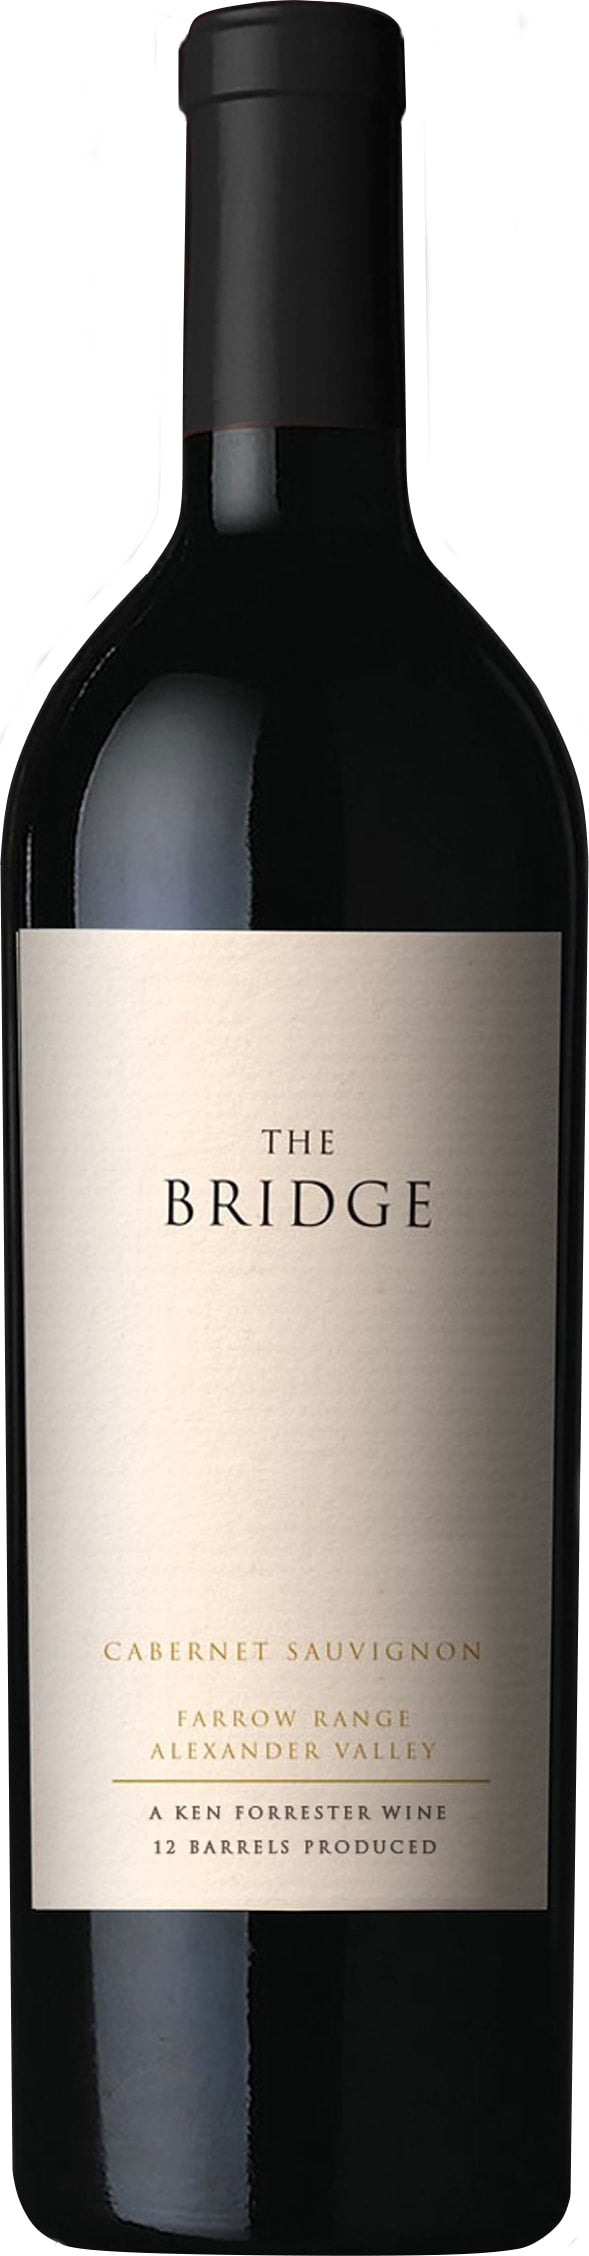 Ken Forrester Wines The Bridge Cabernet Sauvignon 2014 6x75cl - Just Wines 